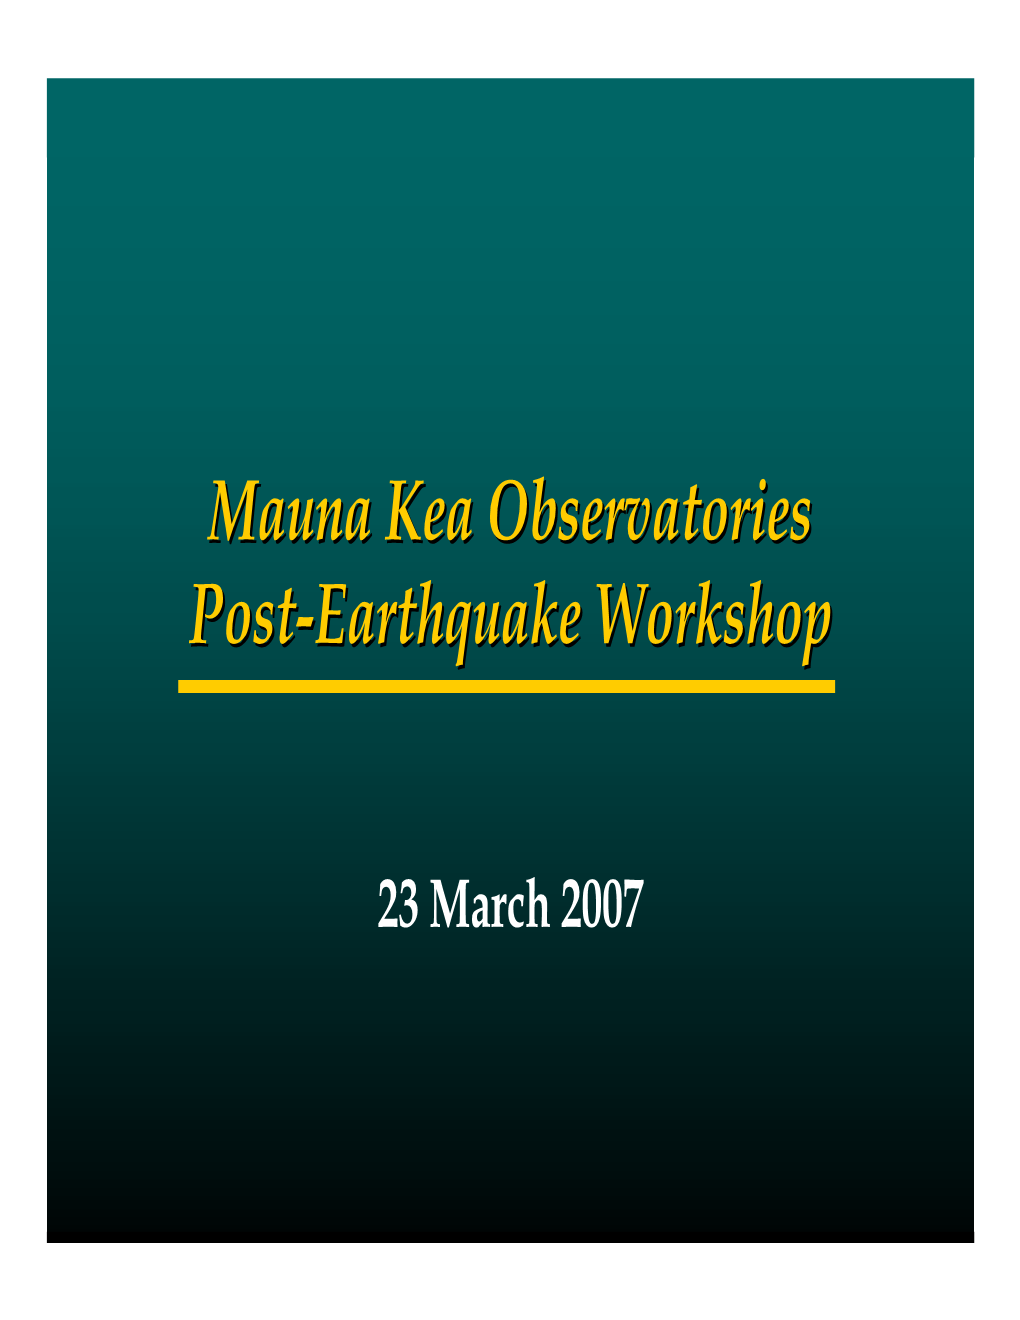 Mauna Kea Observatories Post-Earthquake Workshop